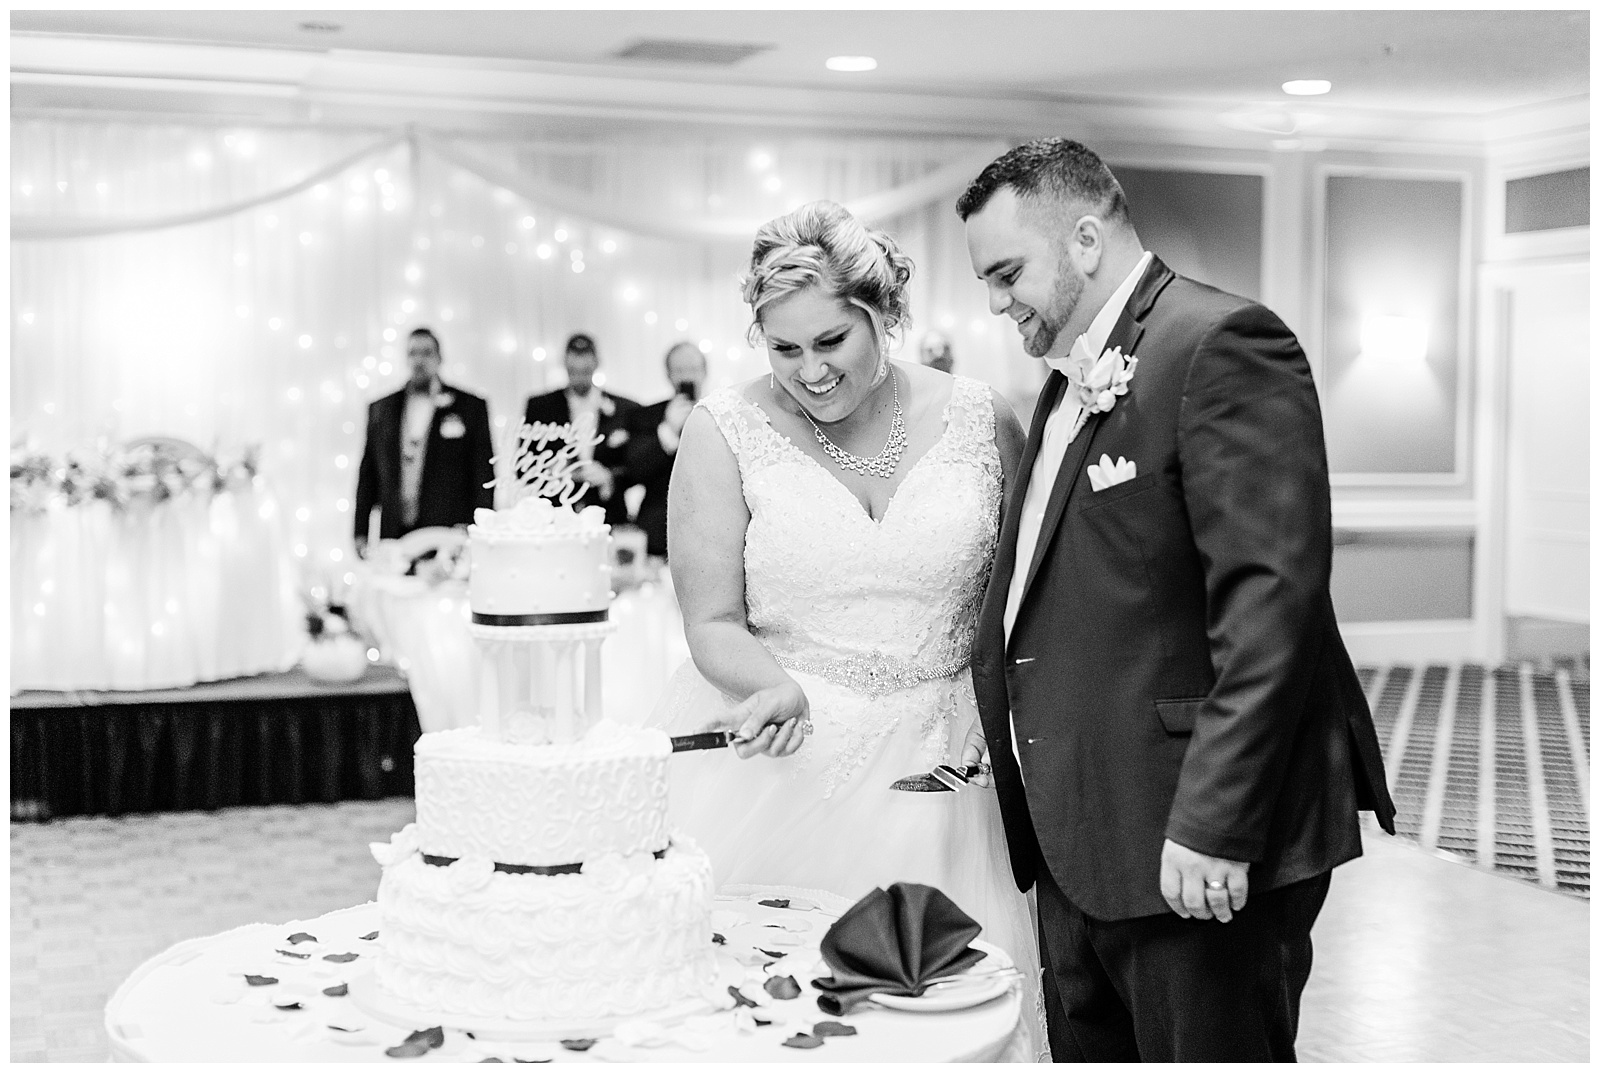 Bride and groom cut cake during Fairlane Club Fall Wedding reception.